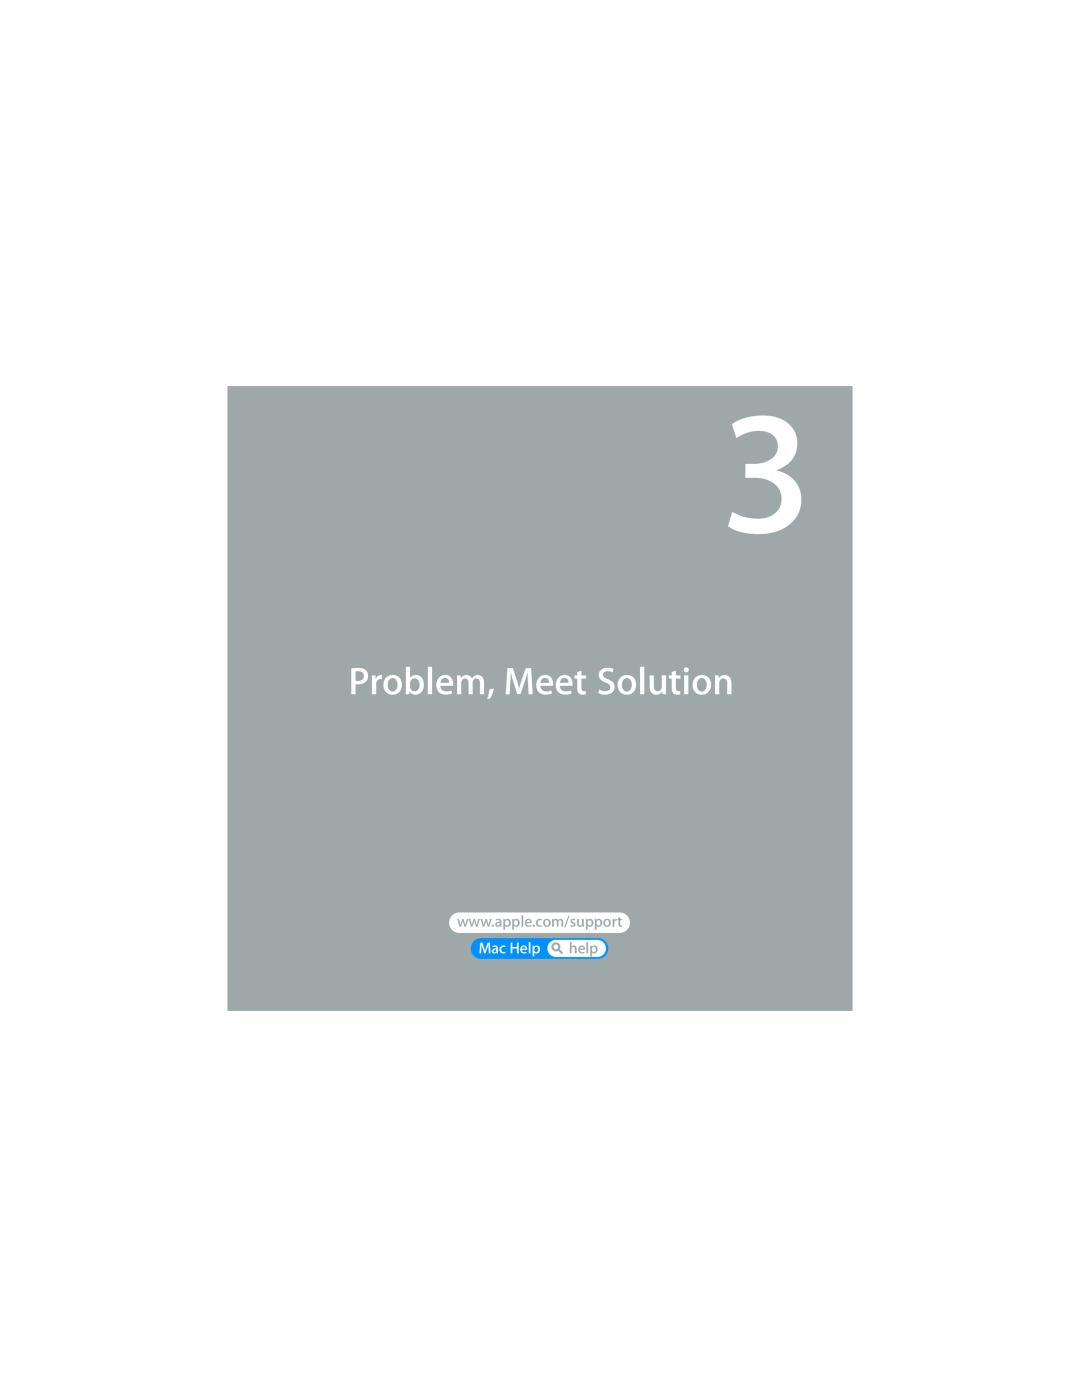 Apple MB003LL/A, MC233LL/A manual Problem, Meet Solution, Mac Help help 